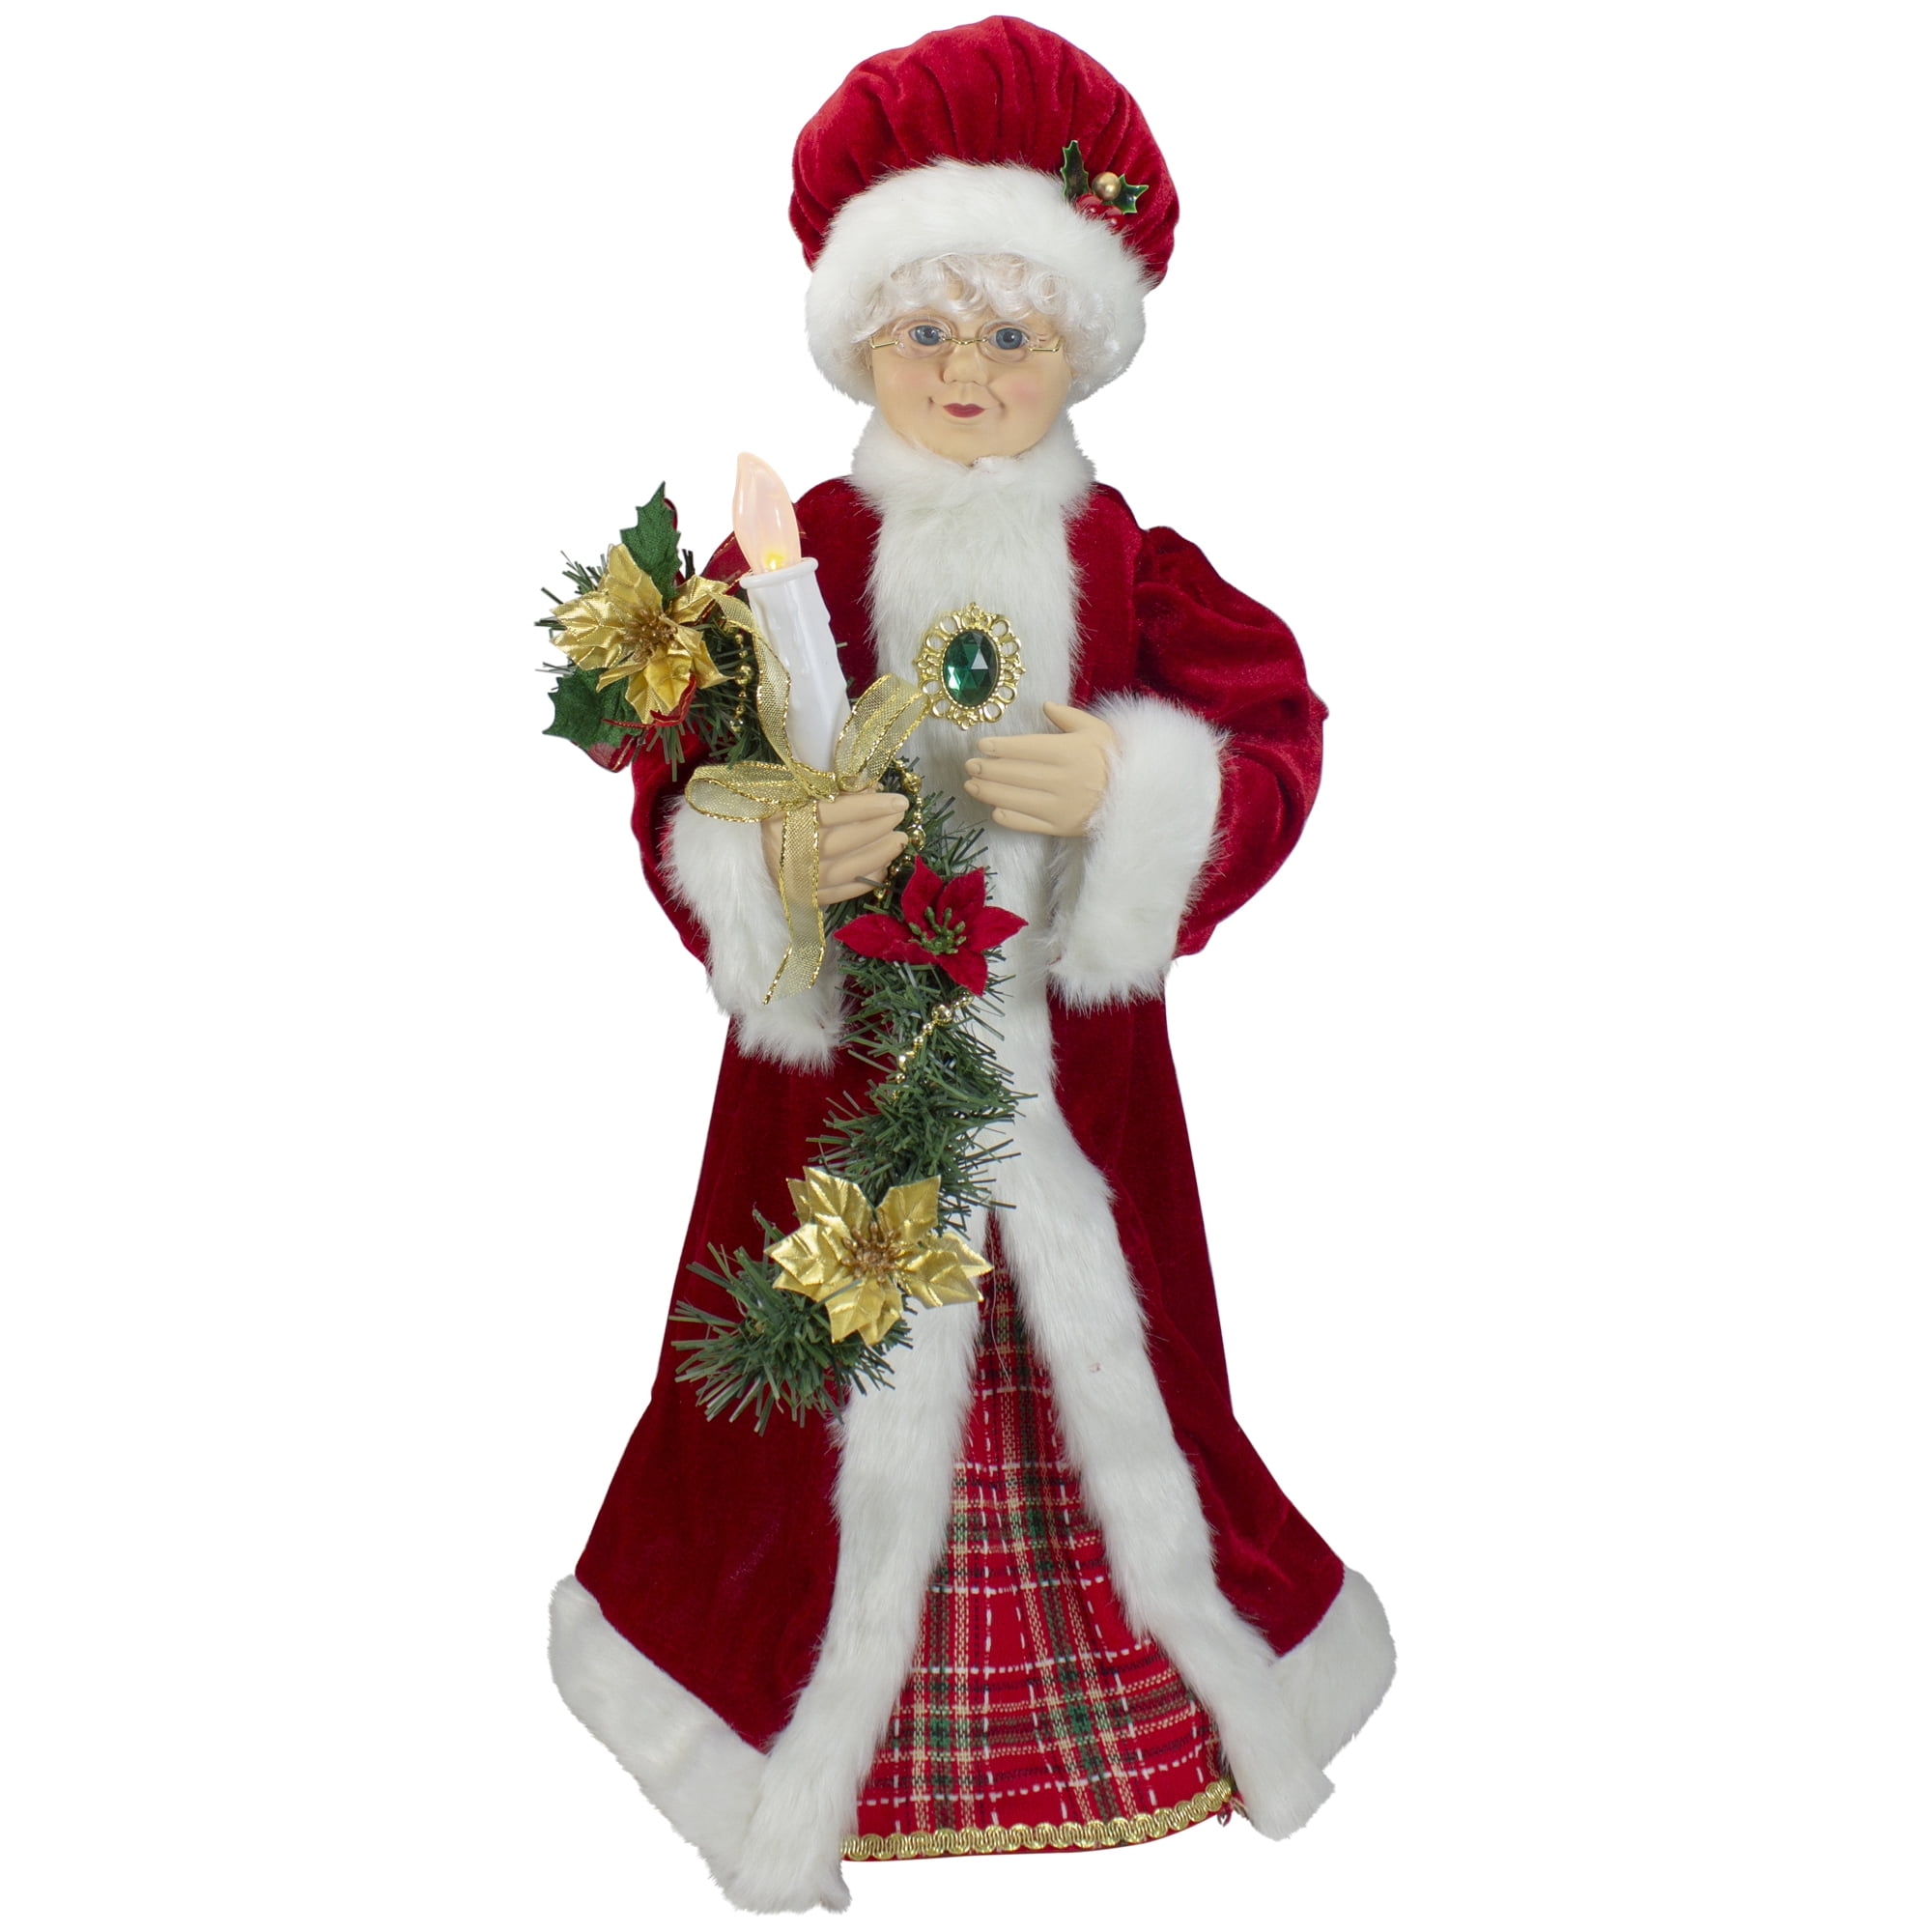 Christmas Woman Women from Santa Claus Mrs Claus Figurine Dollhouse 1:12 